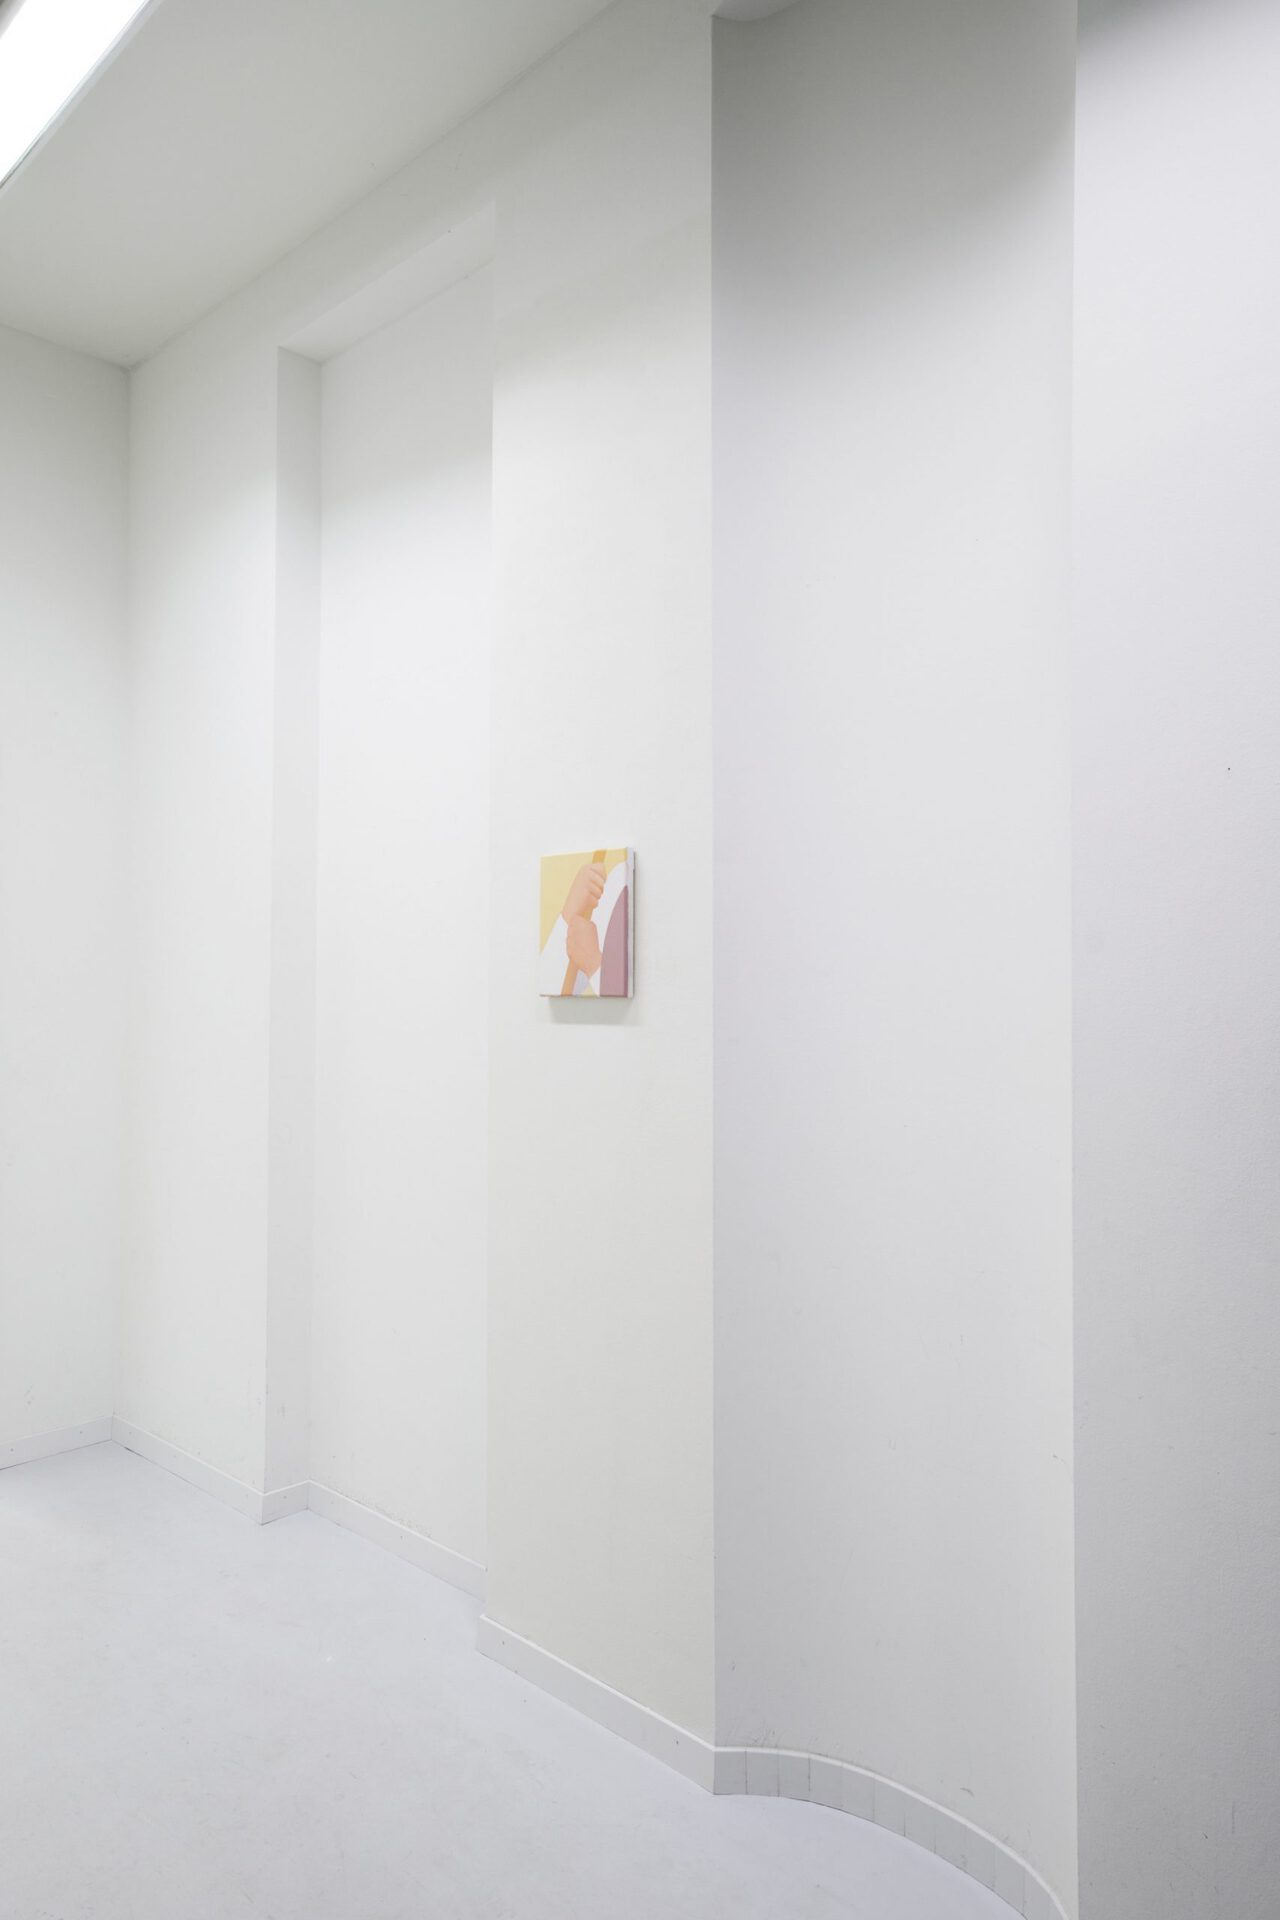 Manuel Stehli, untitled (after Piero), 28x24cm, oil on canvas, 2019, exhibition view